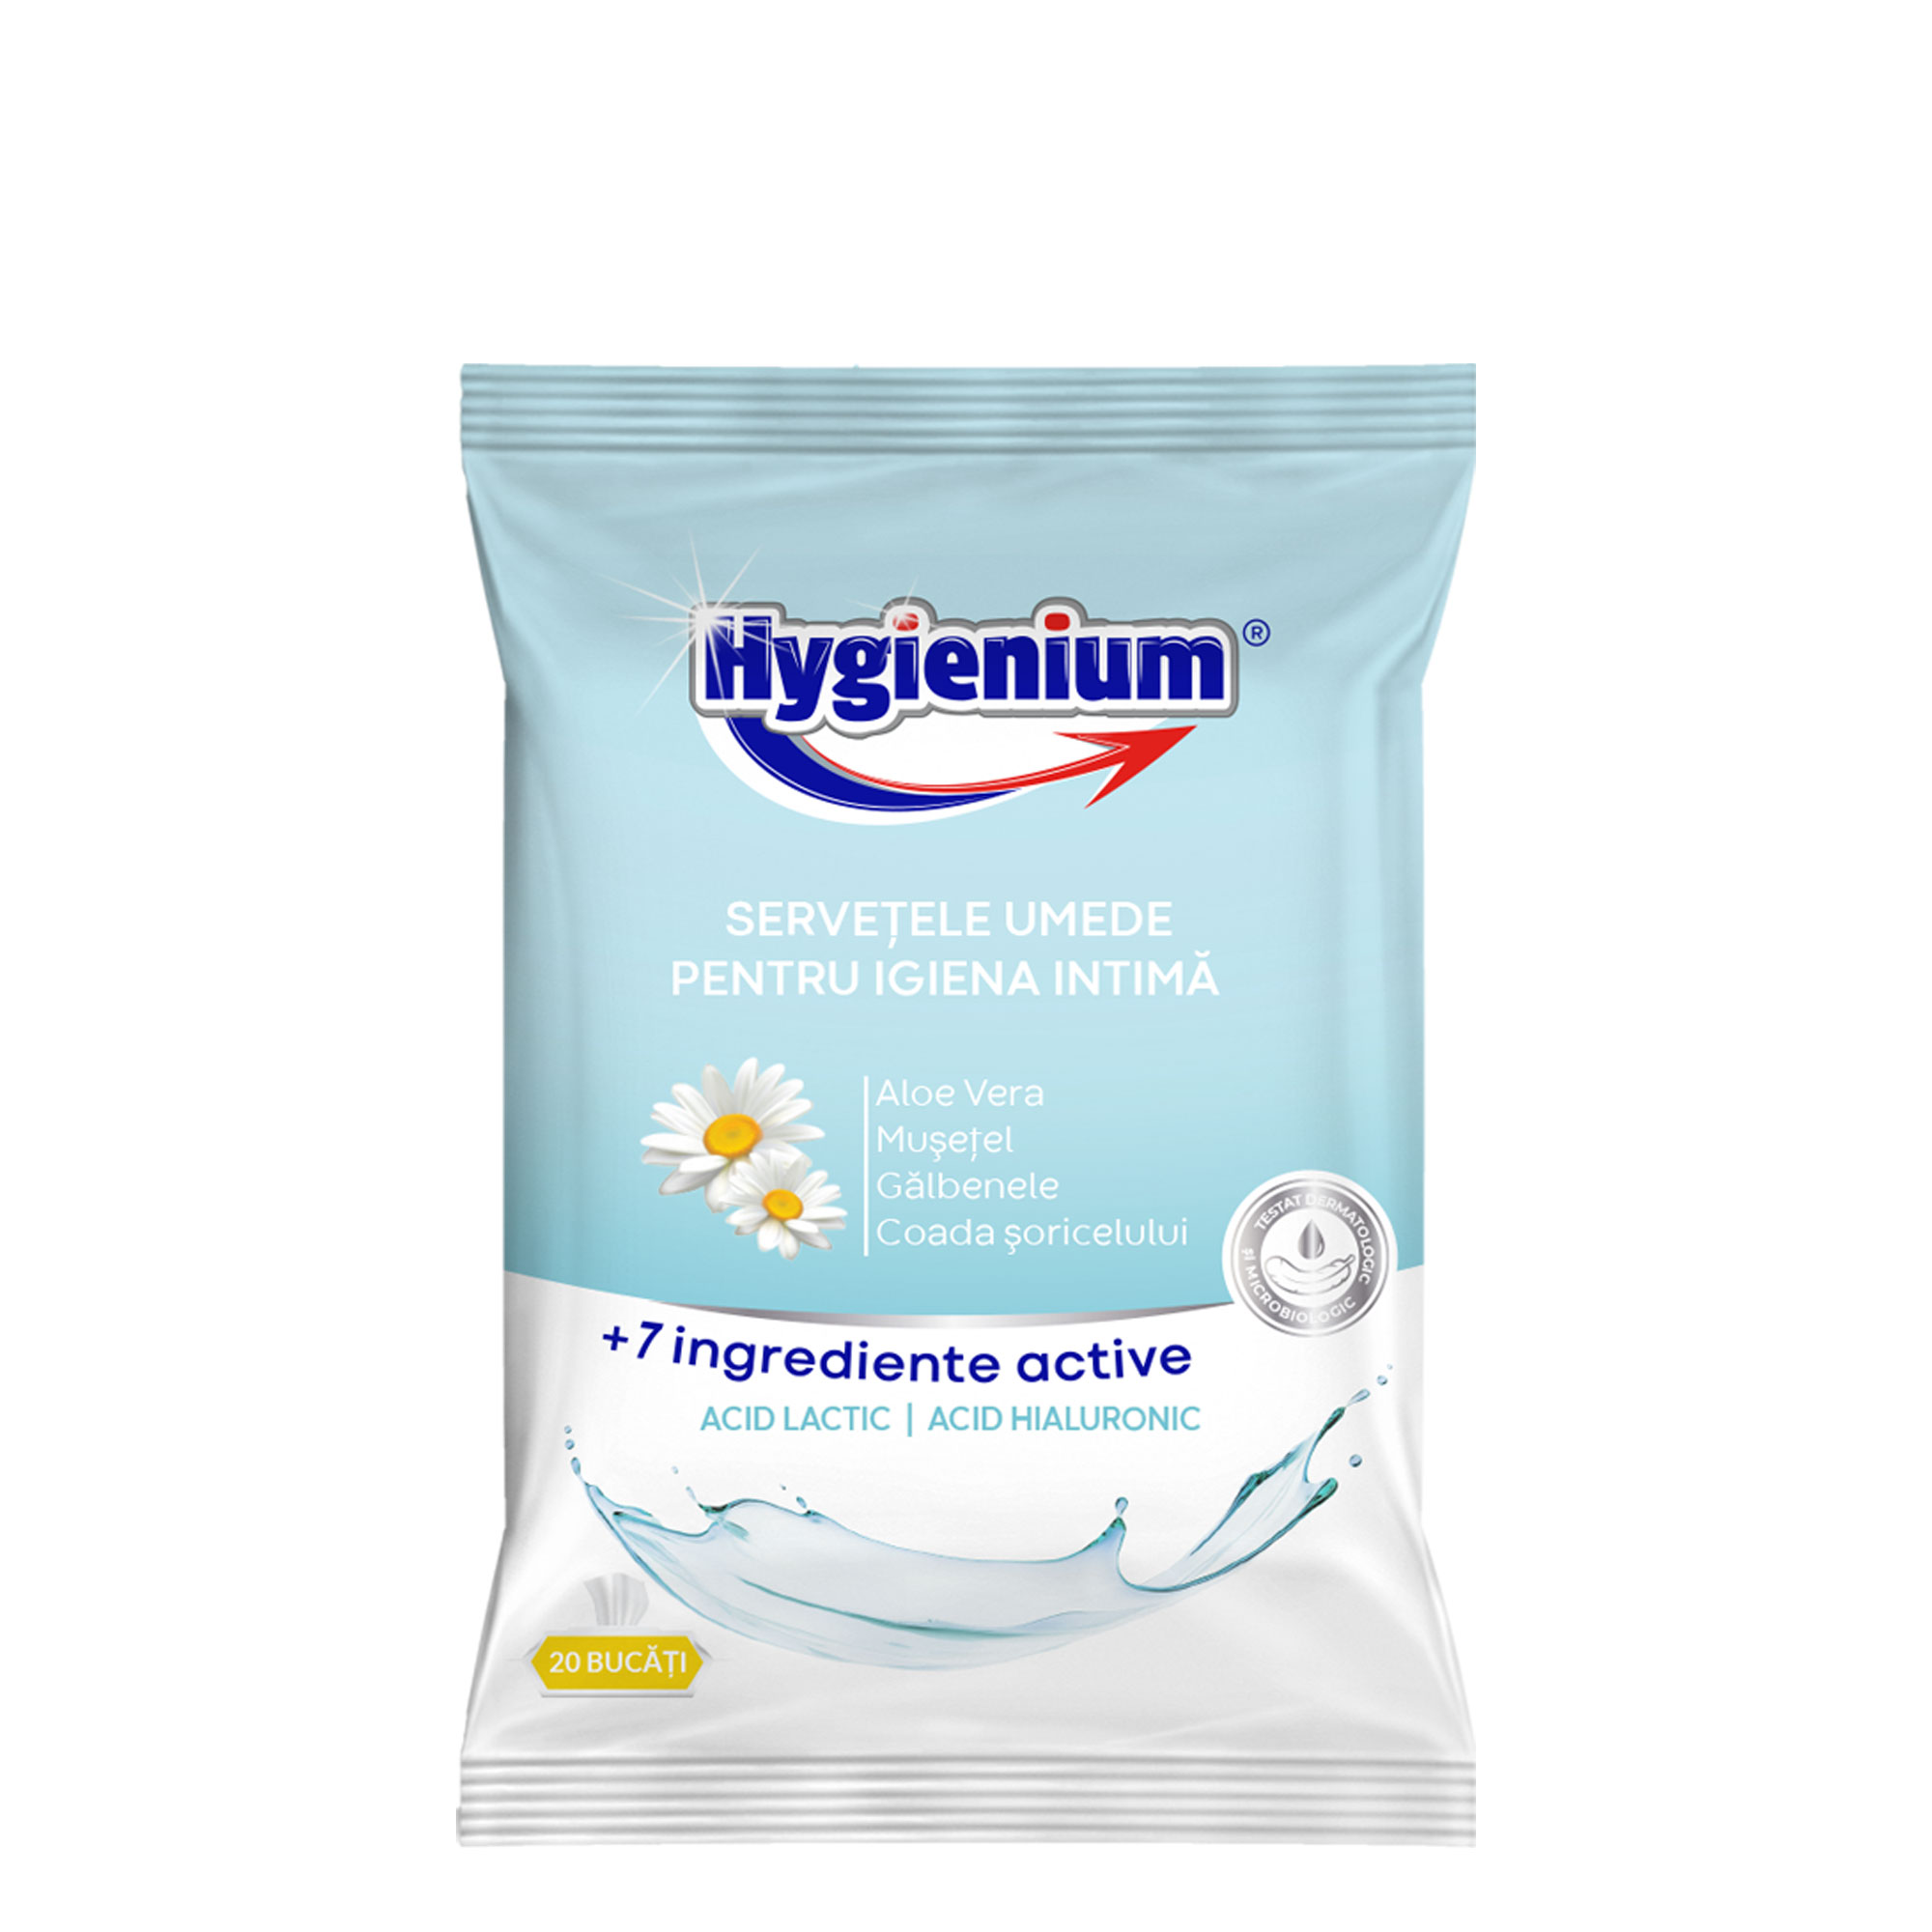 Hygienium Servetele umede pentru igiena intima 20 pcs